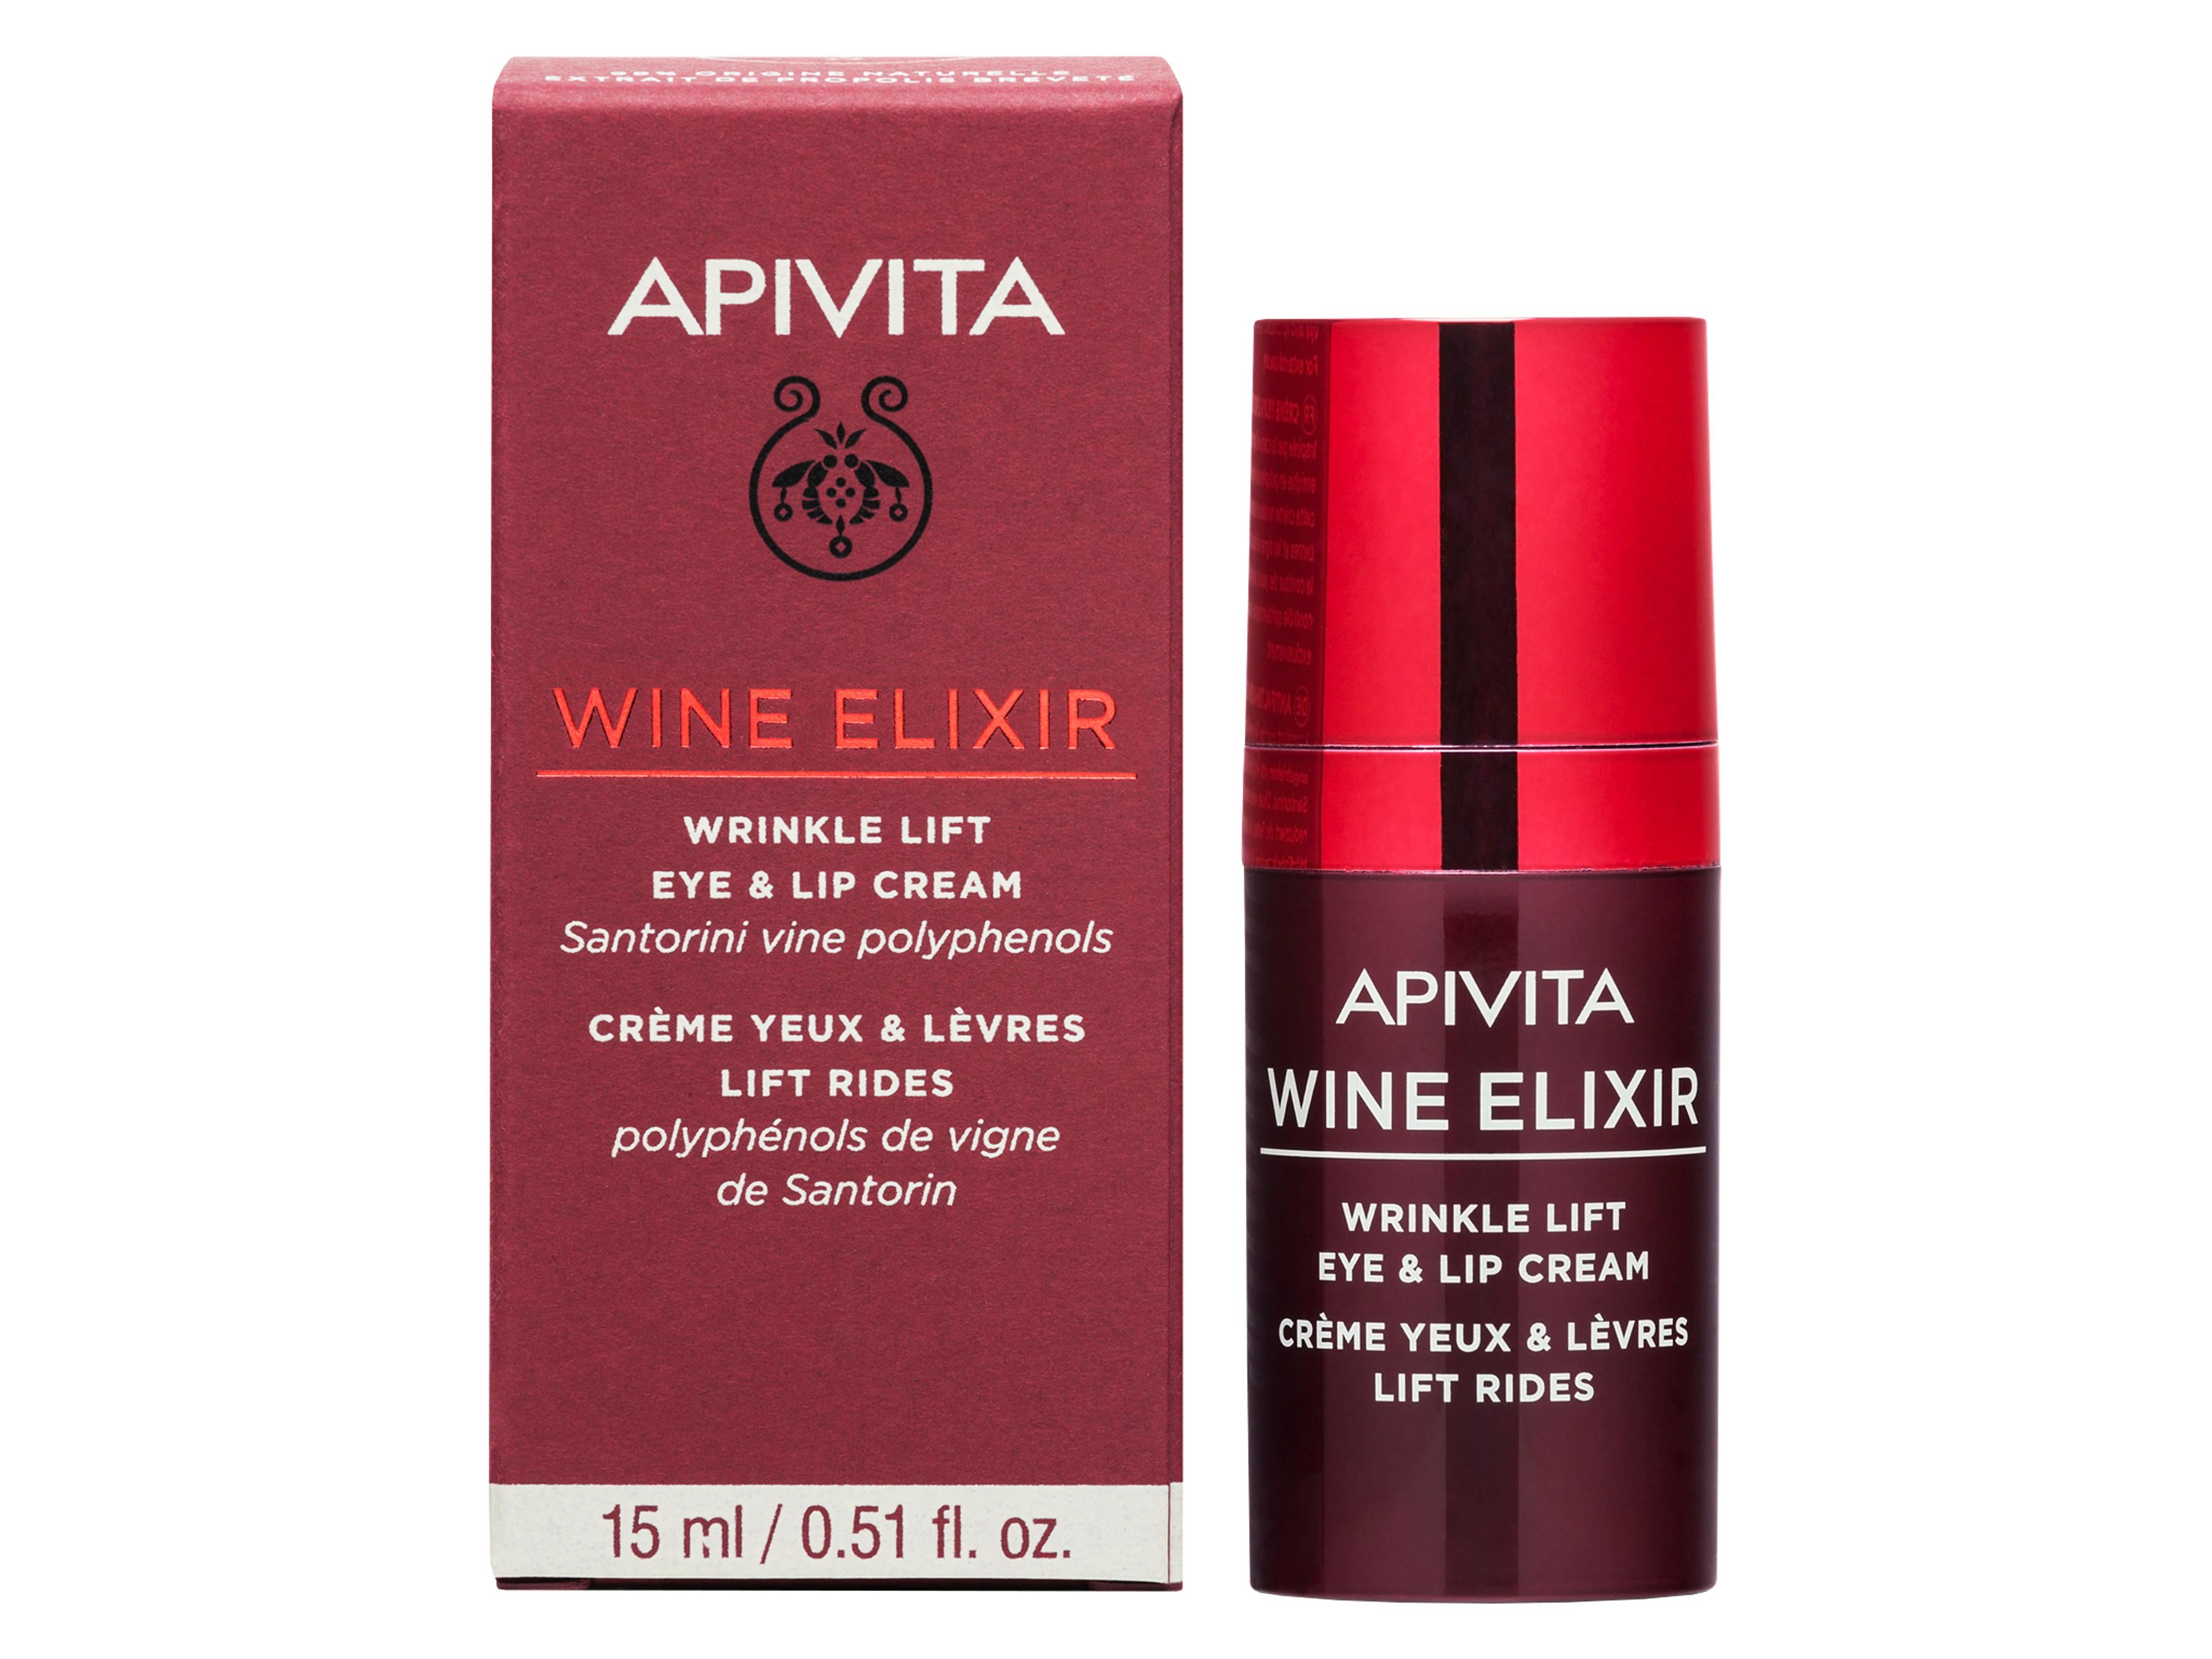 Apivita Wine Elixir Wrinkle Lift Eye & Lip Cream, 15 ml